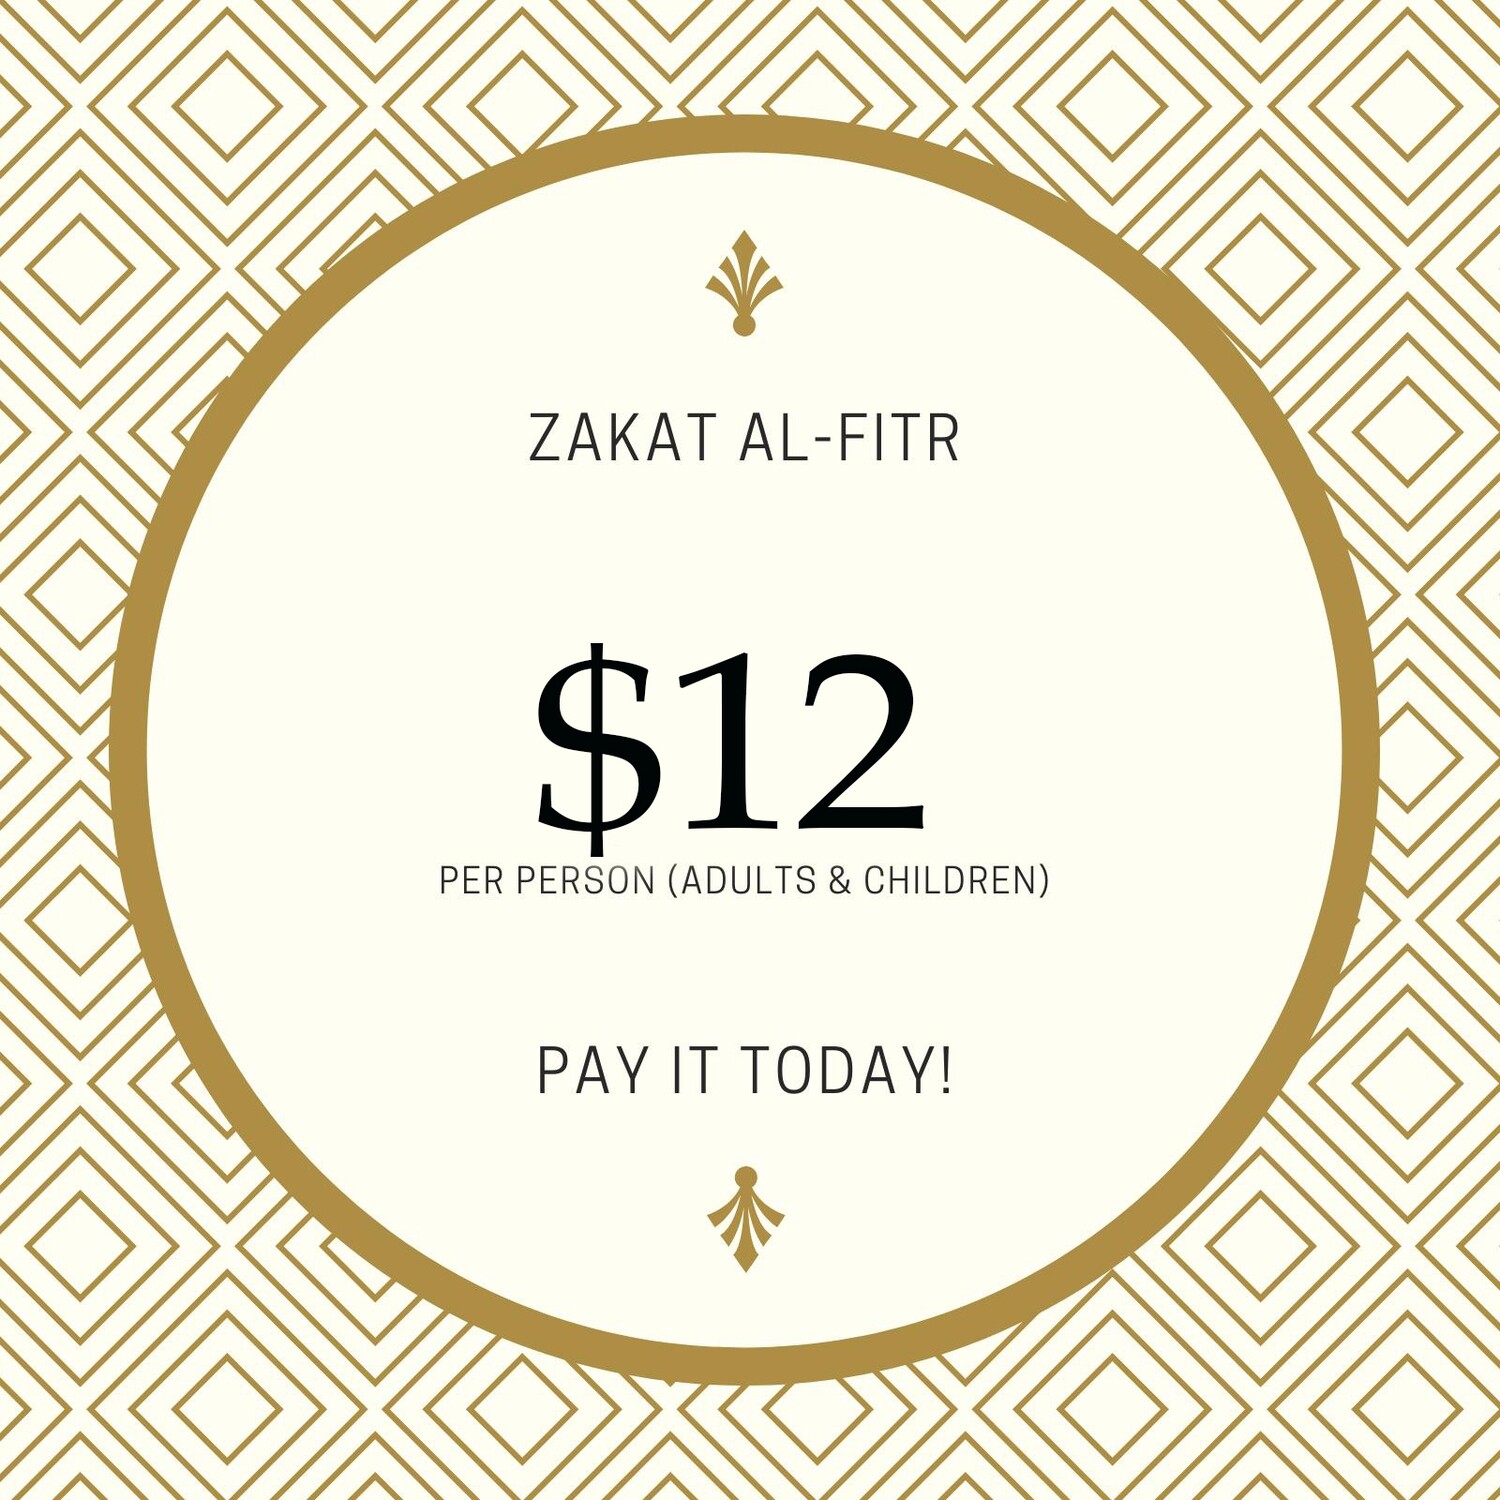 Zakat Al-Fitr